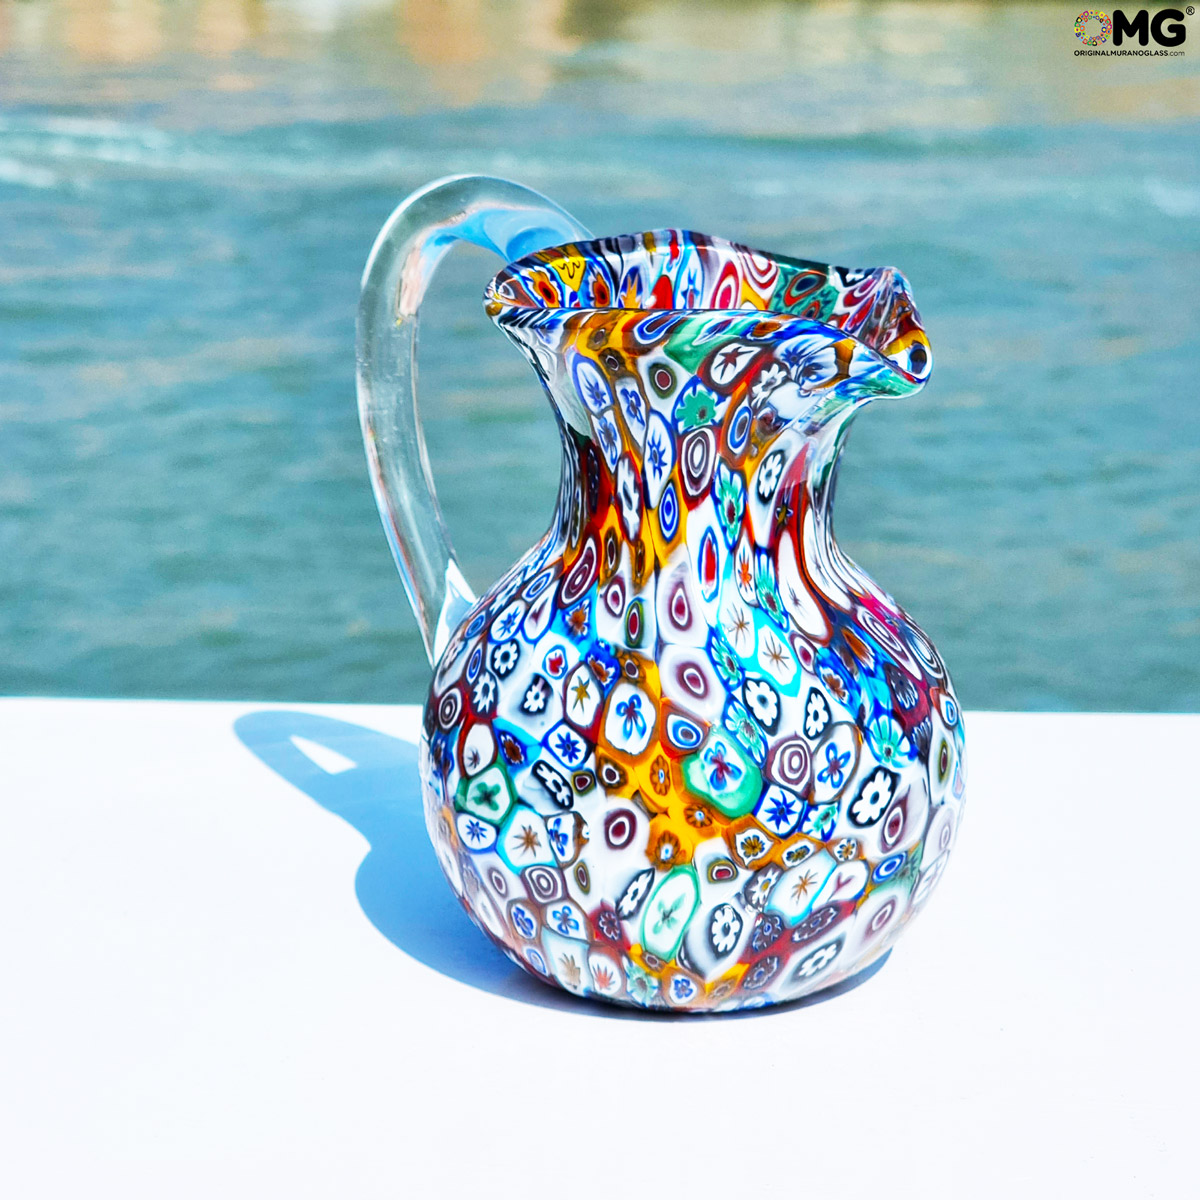 Original Murano Glass, Italian Art Collection, OMG